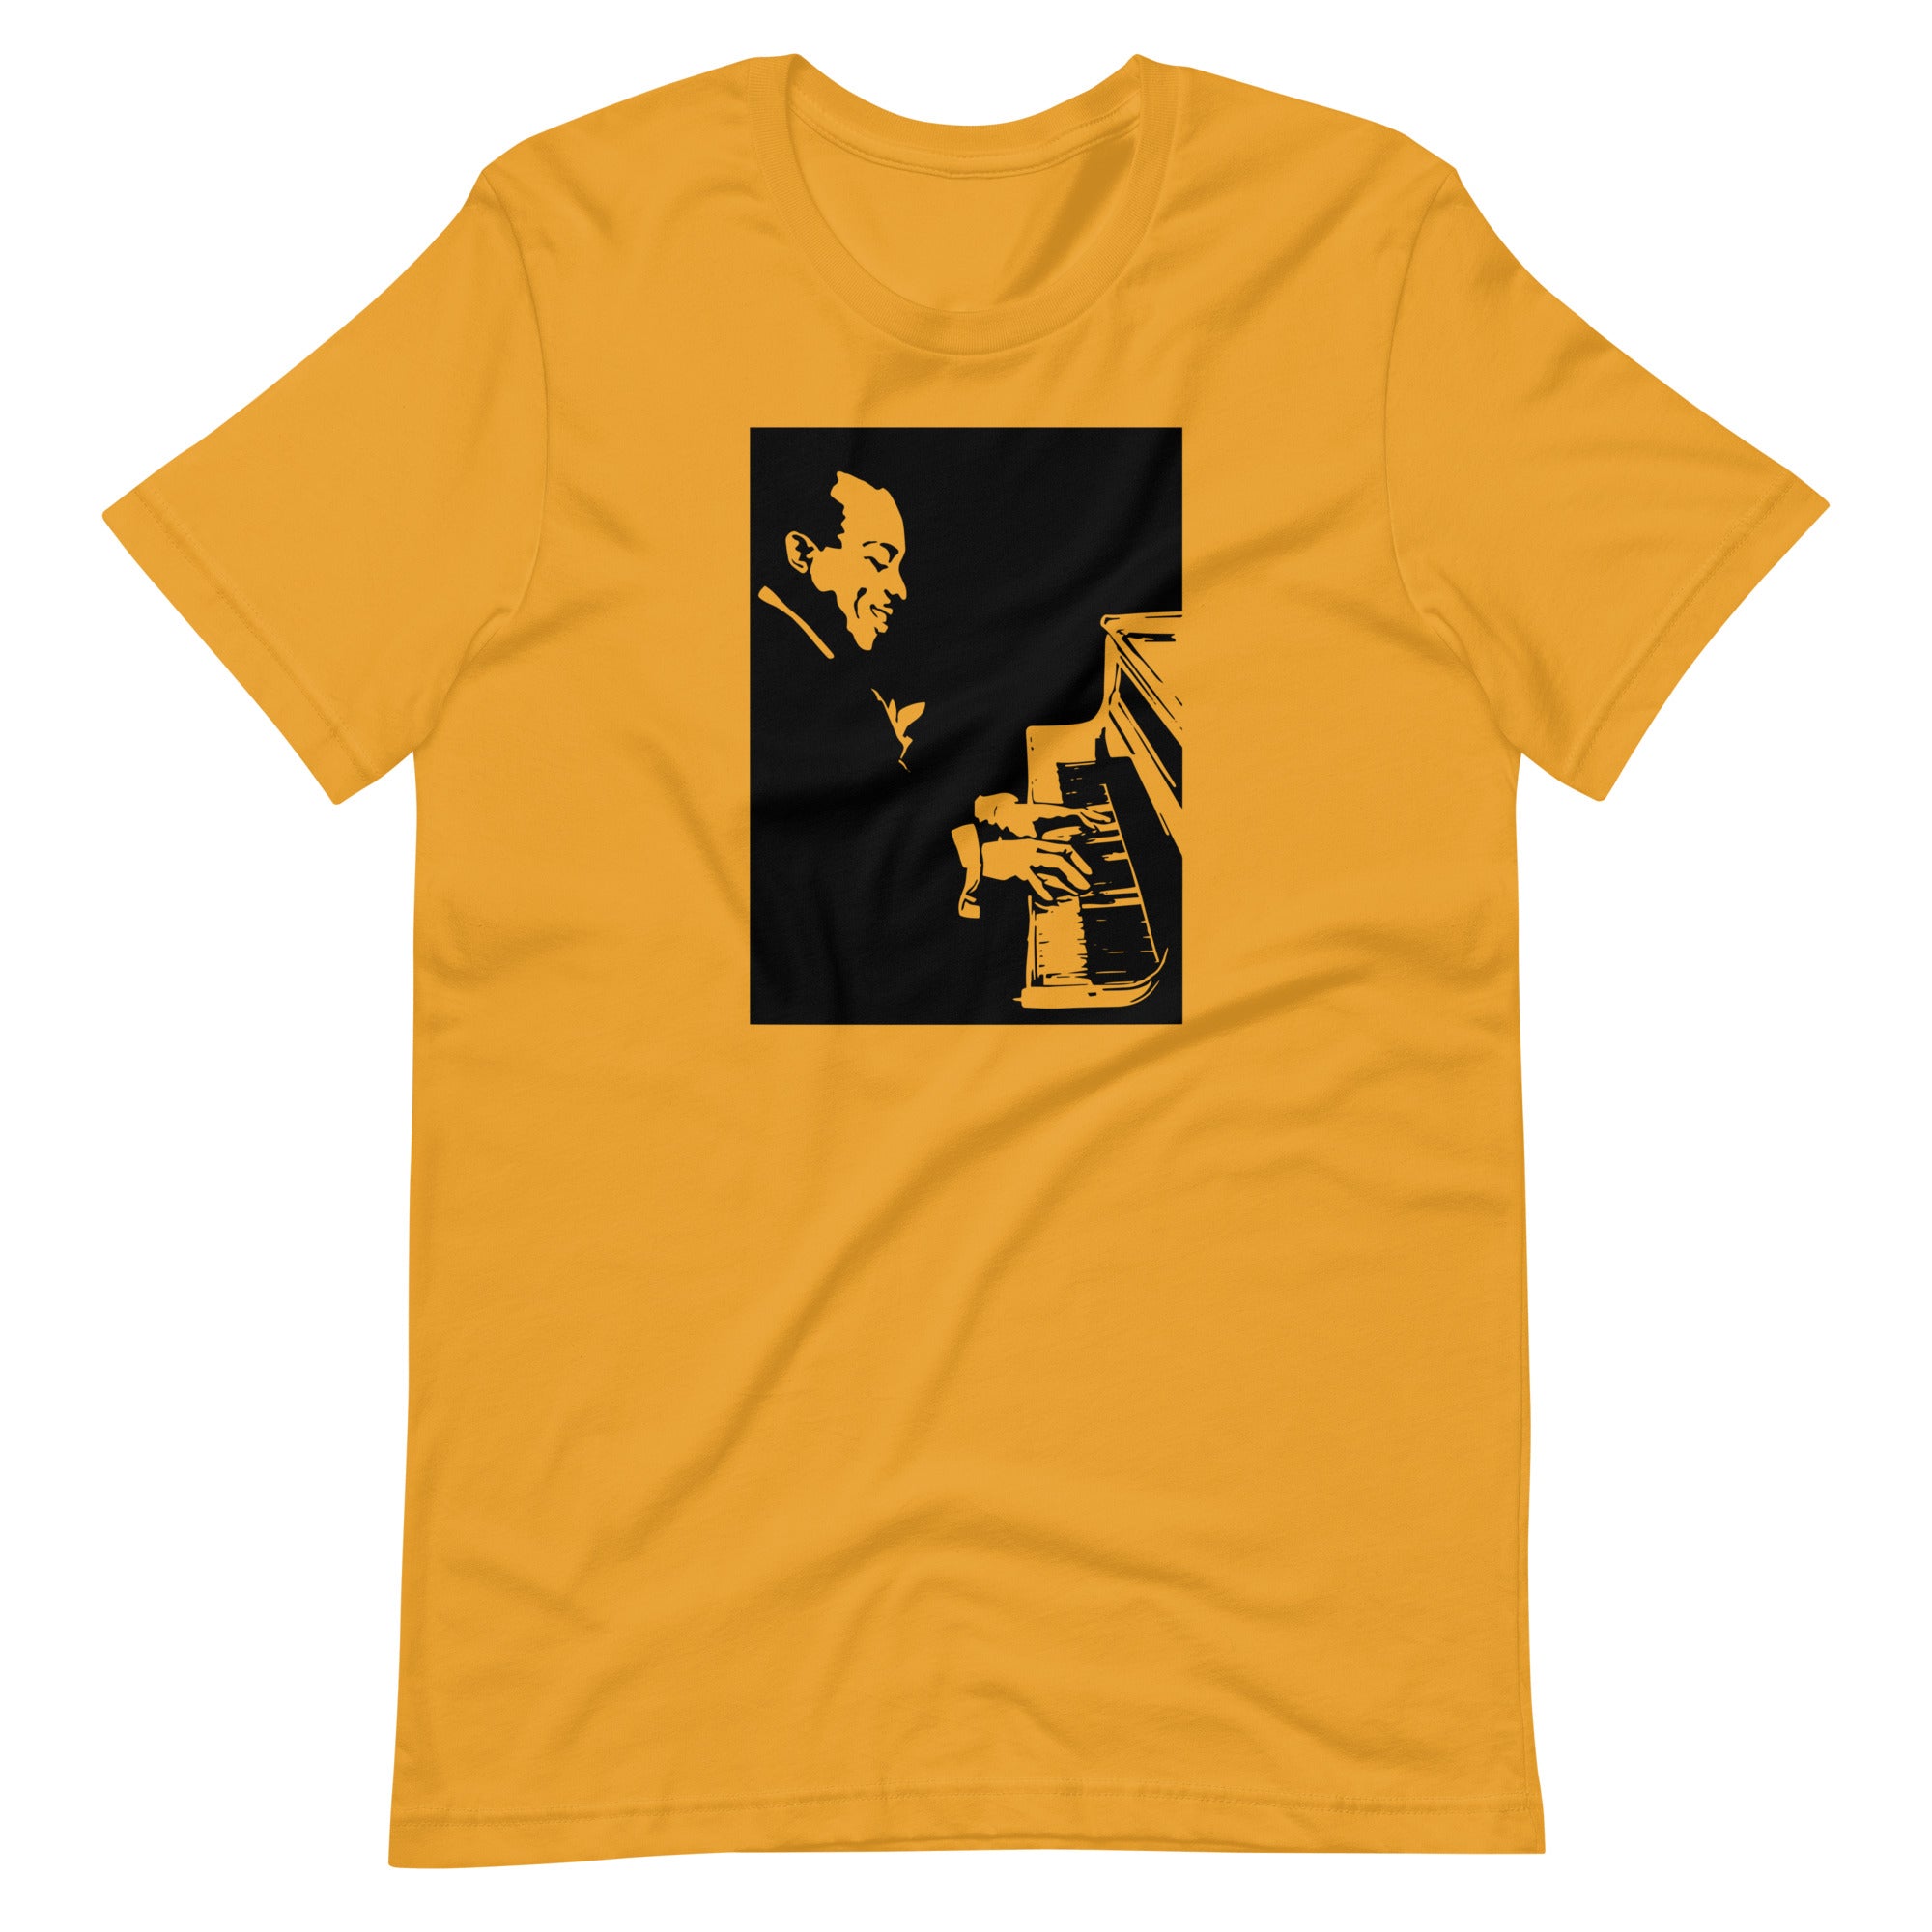 Count Basie / Jazz Masters by Gosia Aniolkowska / Unisex t-shirt